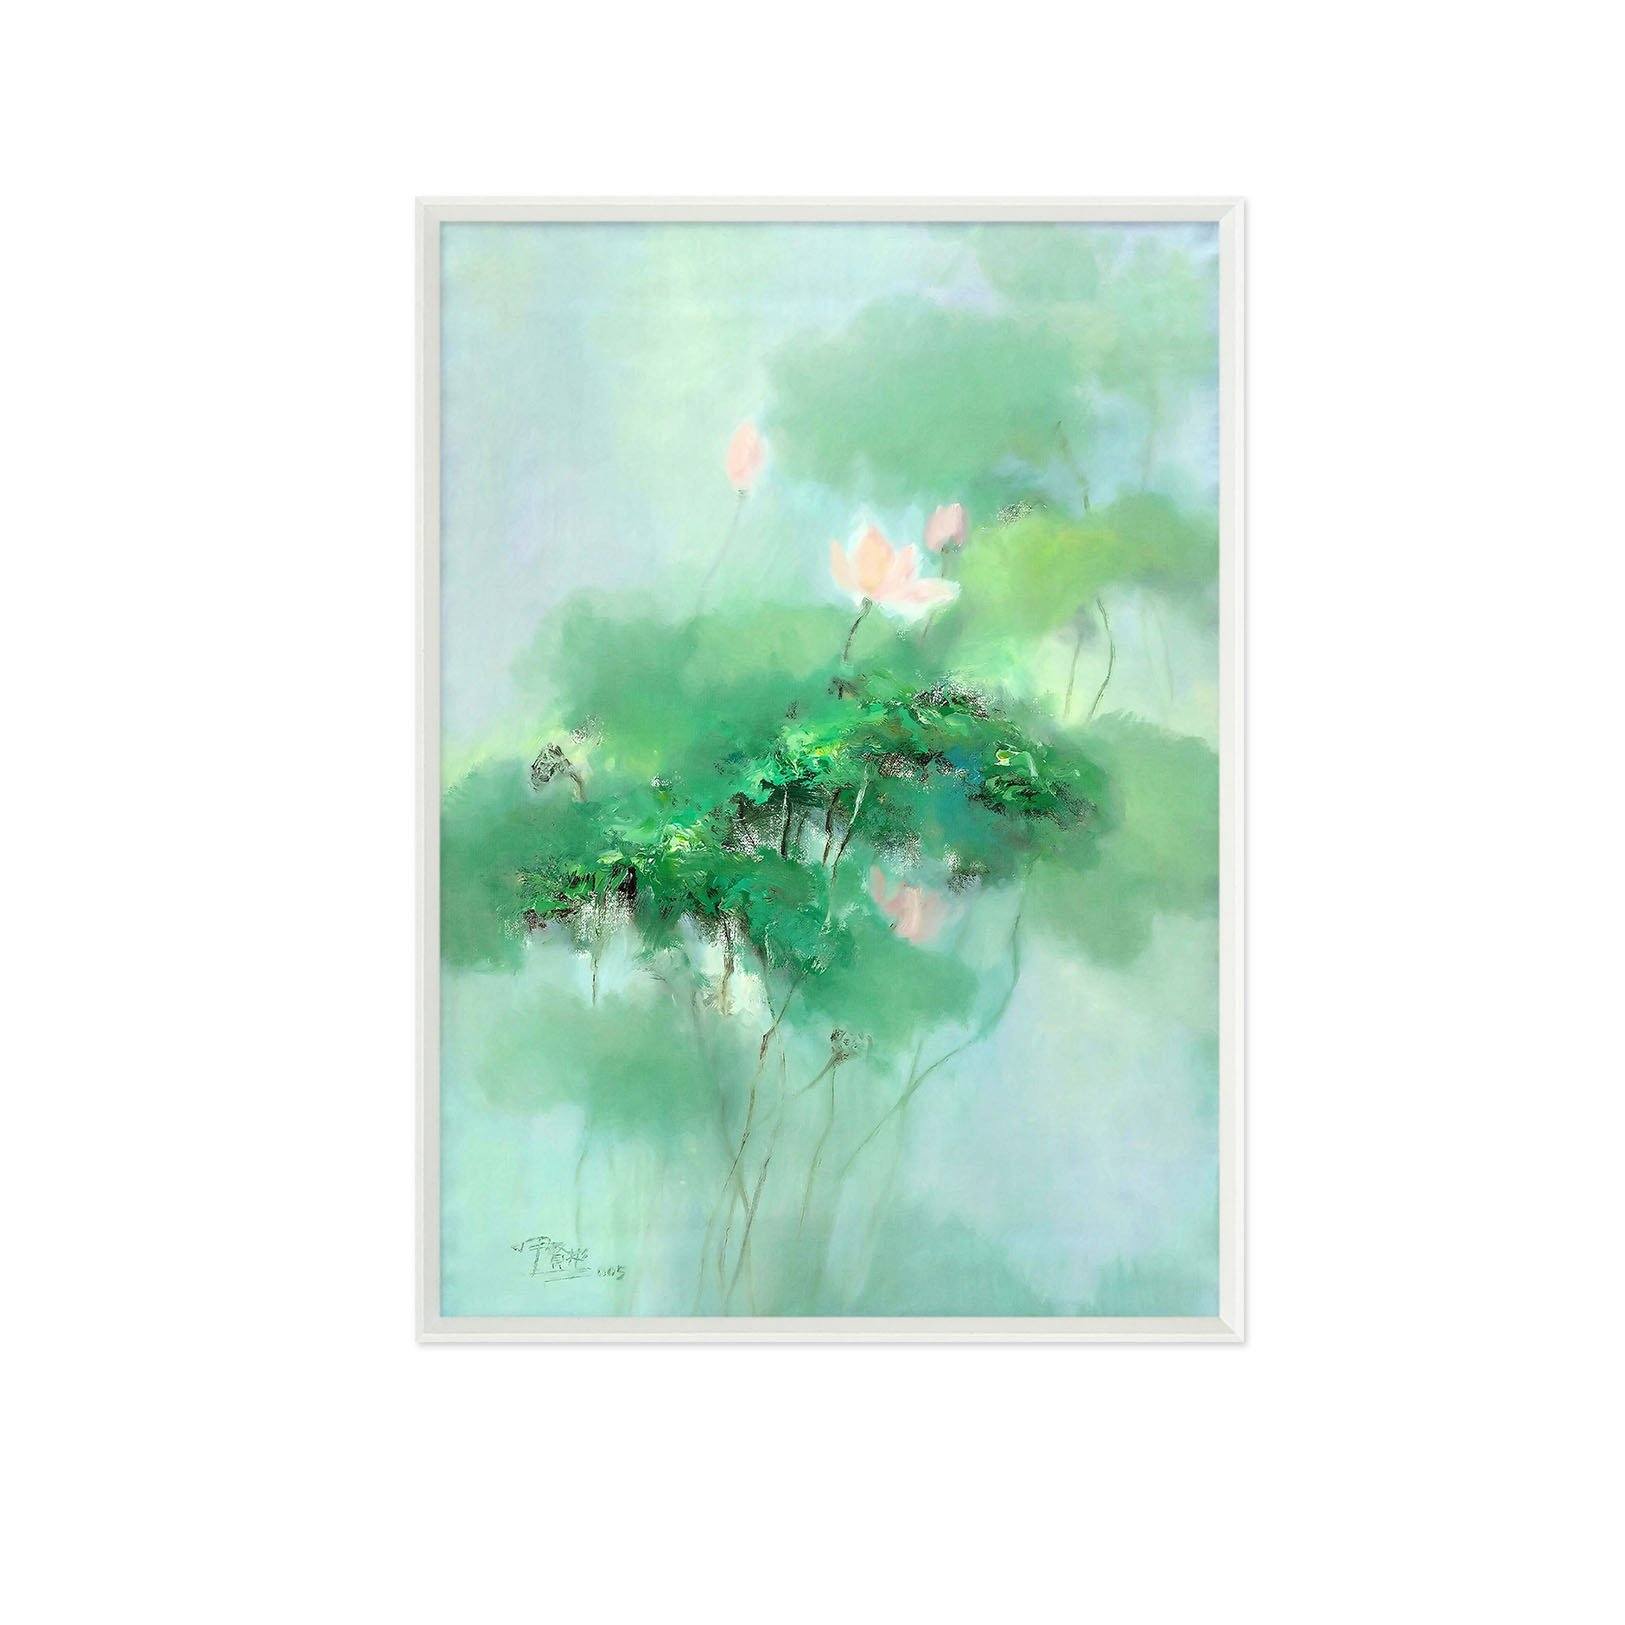 3D Lotus Flower 107 Fake Framed Print Painting Wallpaper AJ Creativity Home 